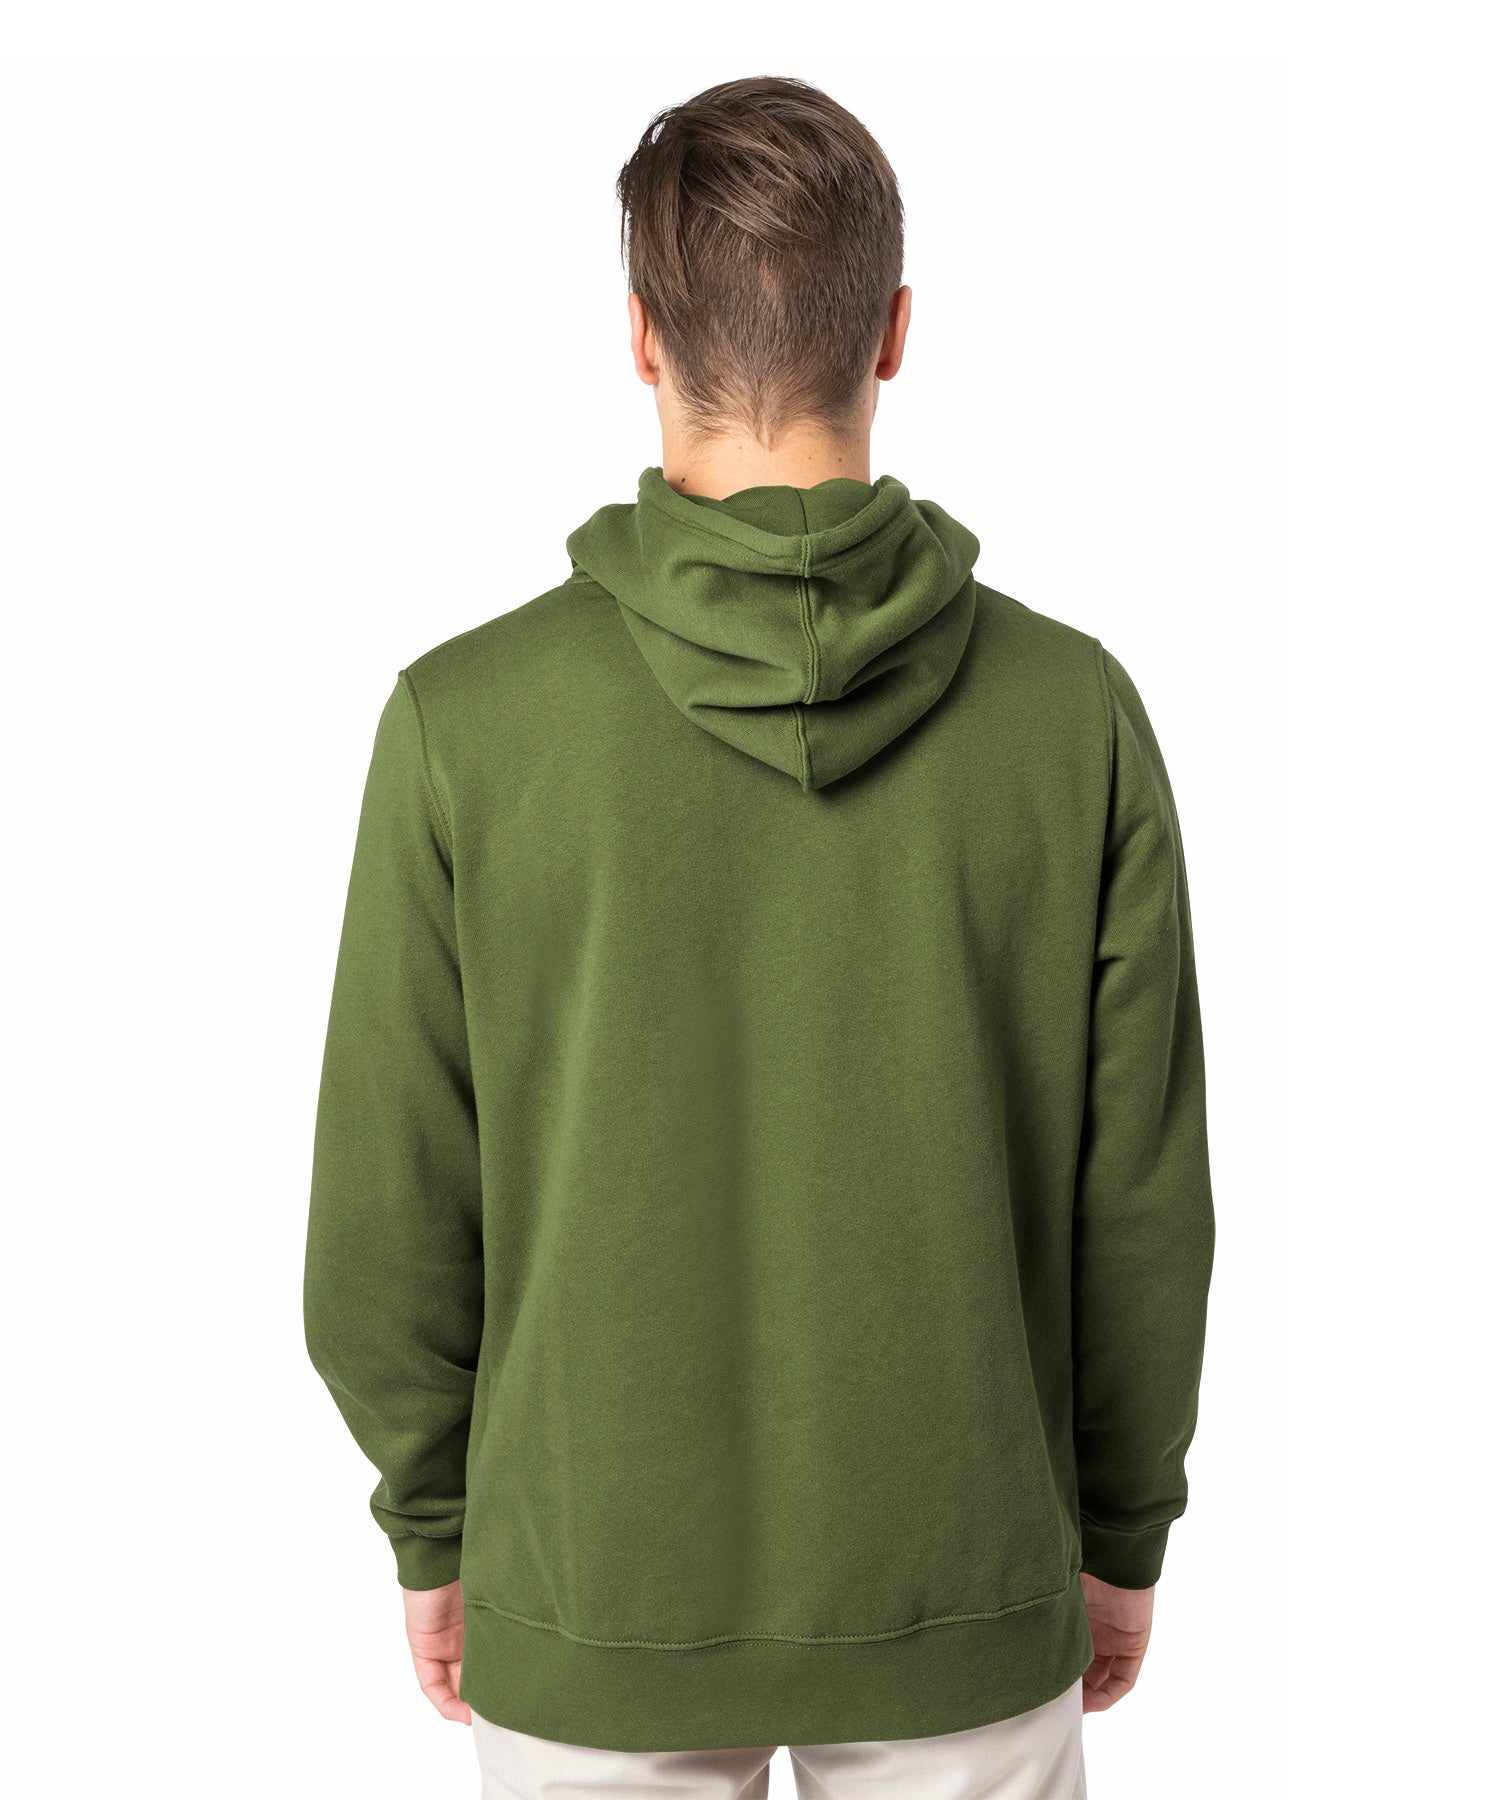 Premium Plain Cotton Olive Green Hoodie/Sweatshirt